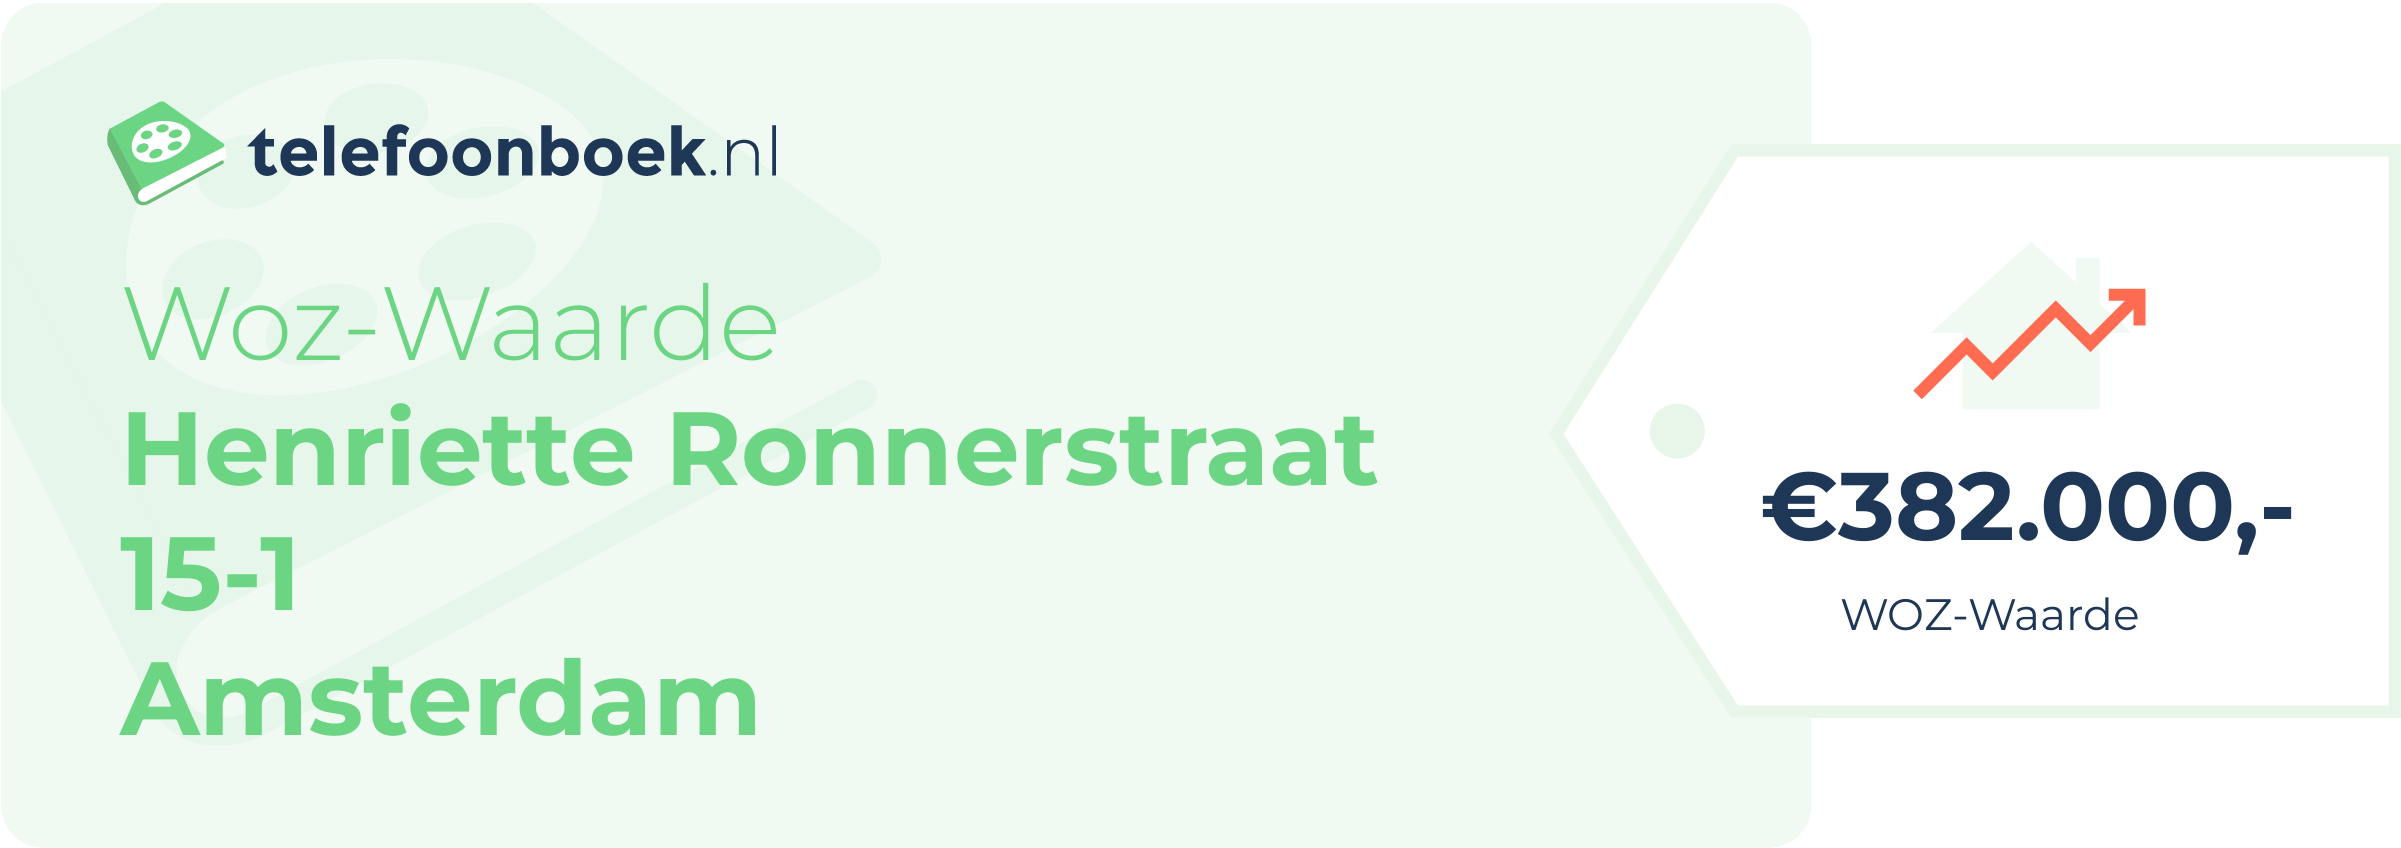 WOZ-waarde Henriette Ronnerstraat 15-1 Amsterdam